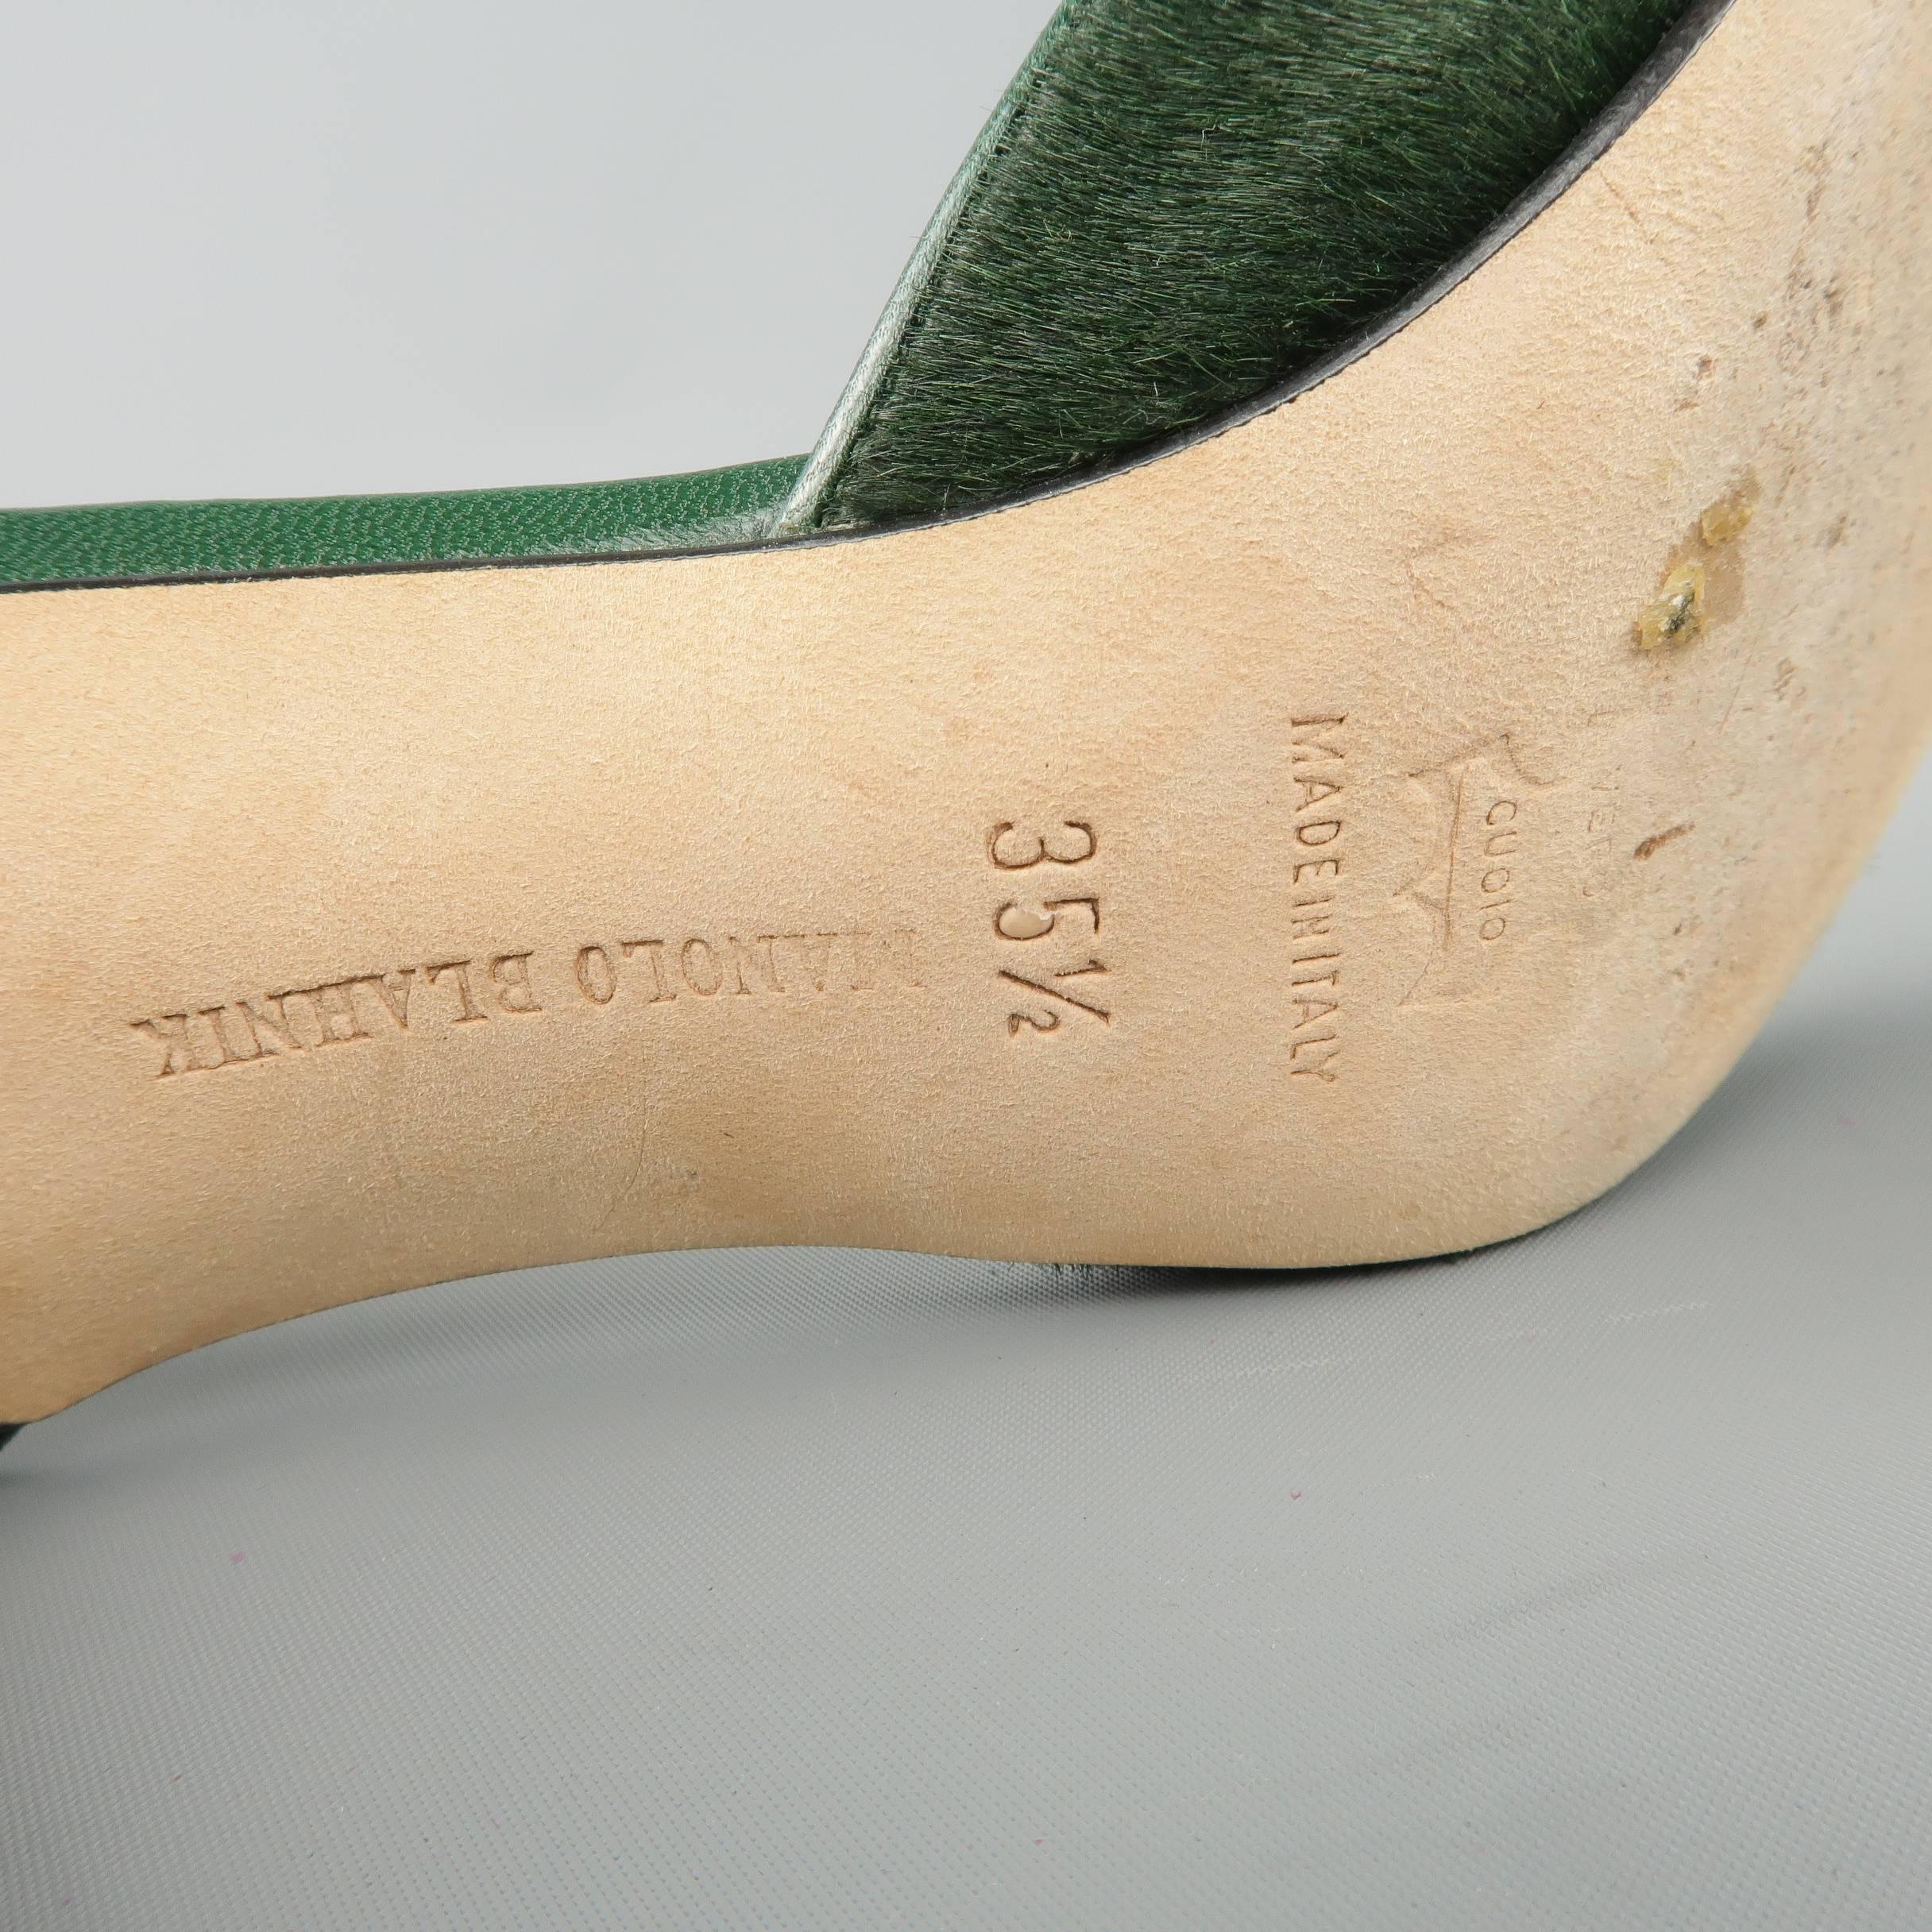 Women's MANOLO BLAHNIK Pumps Heels Size 5.5  - Green Ponyhair & Leather Ankle Strap